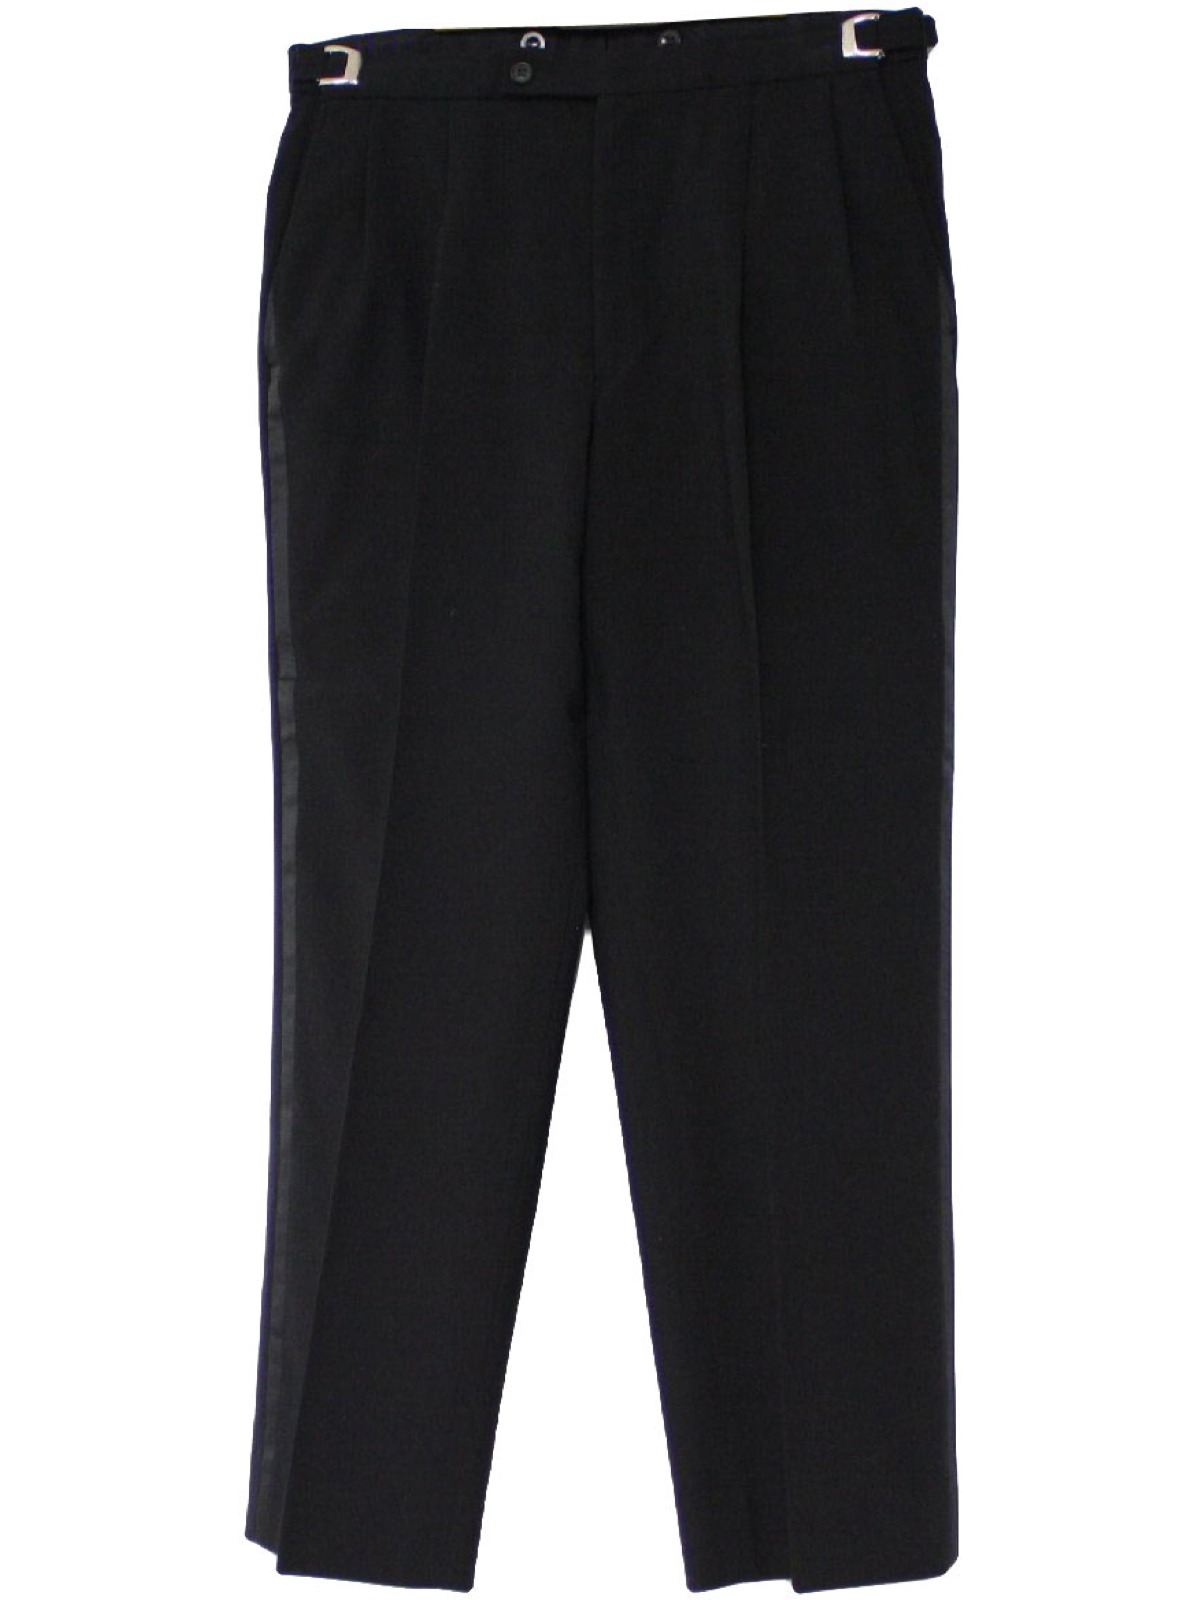 Retro Eighties Pants: 80s -Made in Czechoslovakia- Mens black wool ...